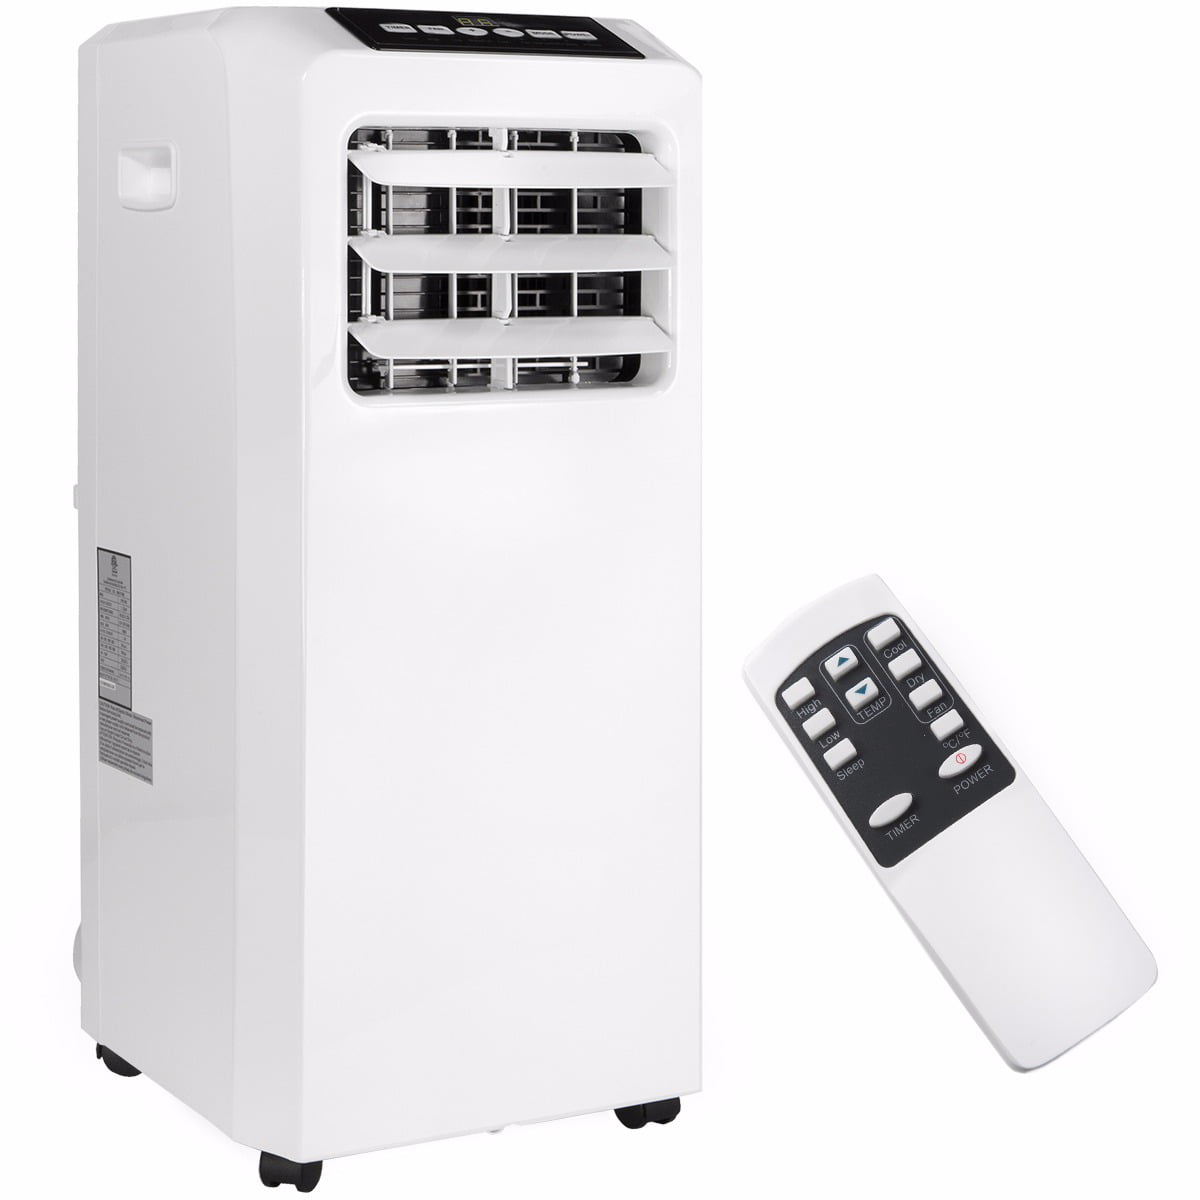  Barton Tumble Dryer White w/Heat Control Automatic